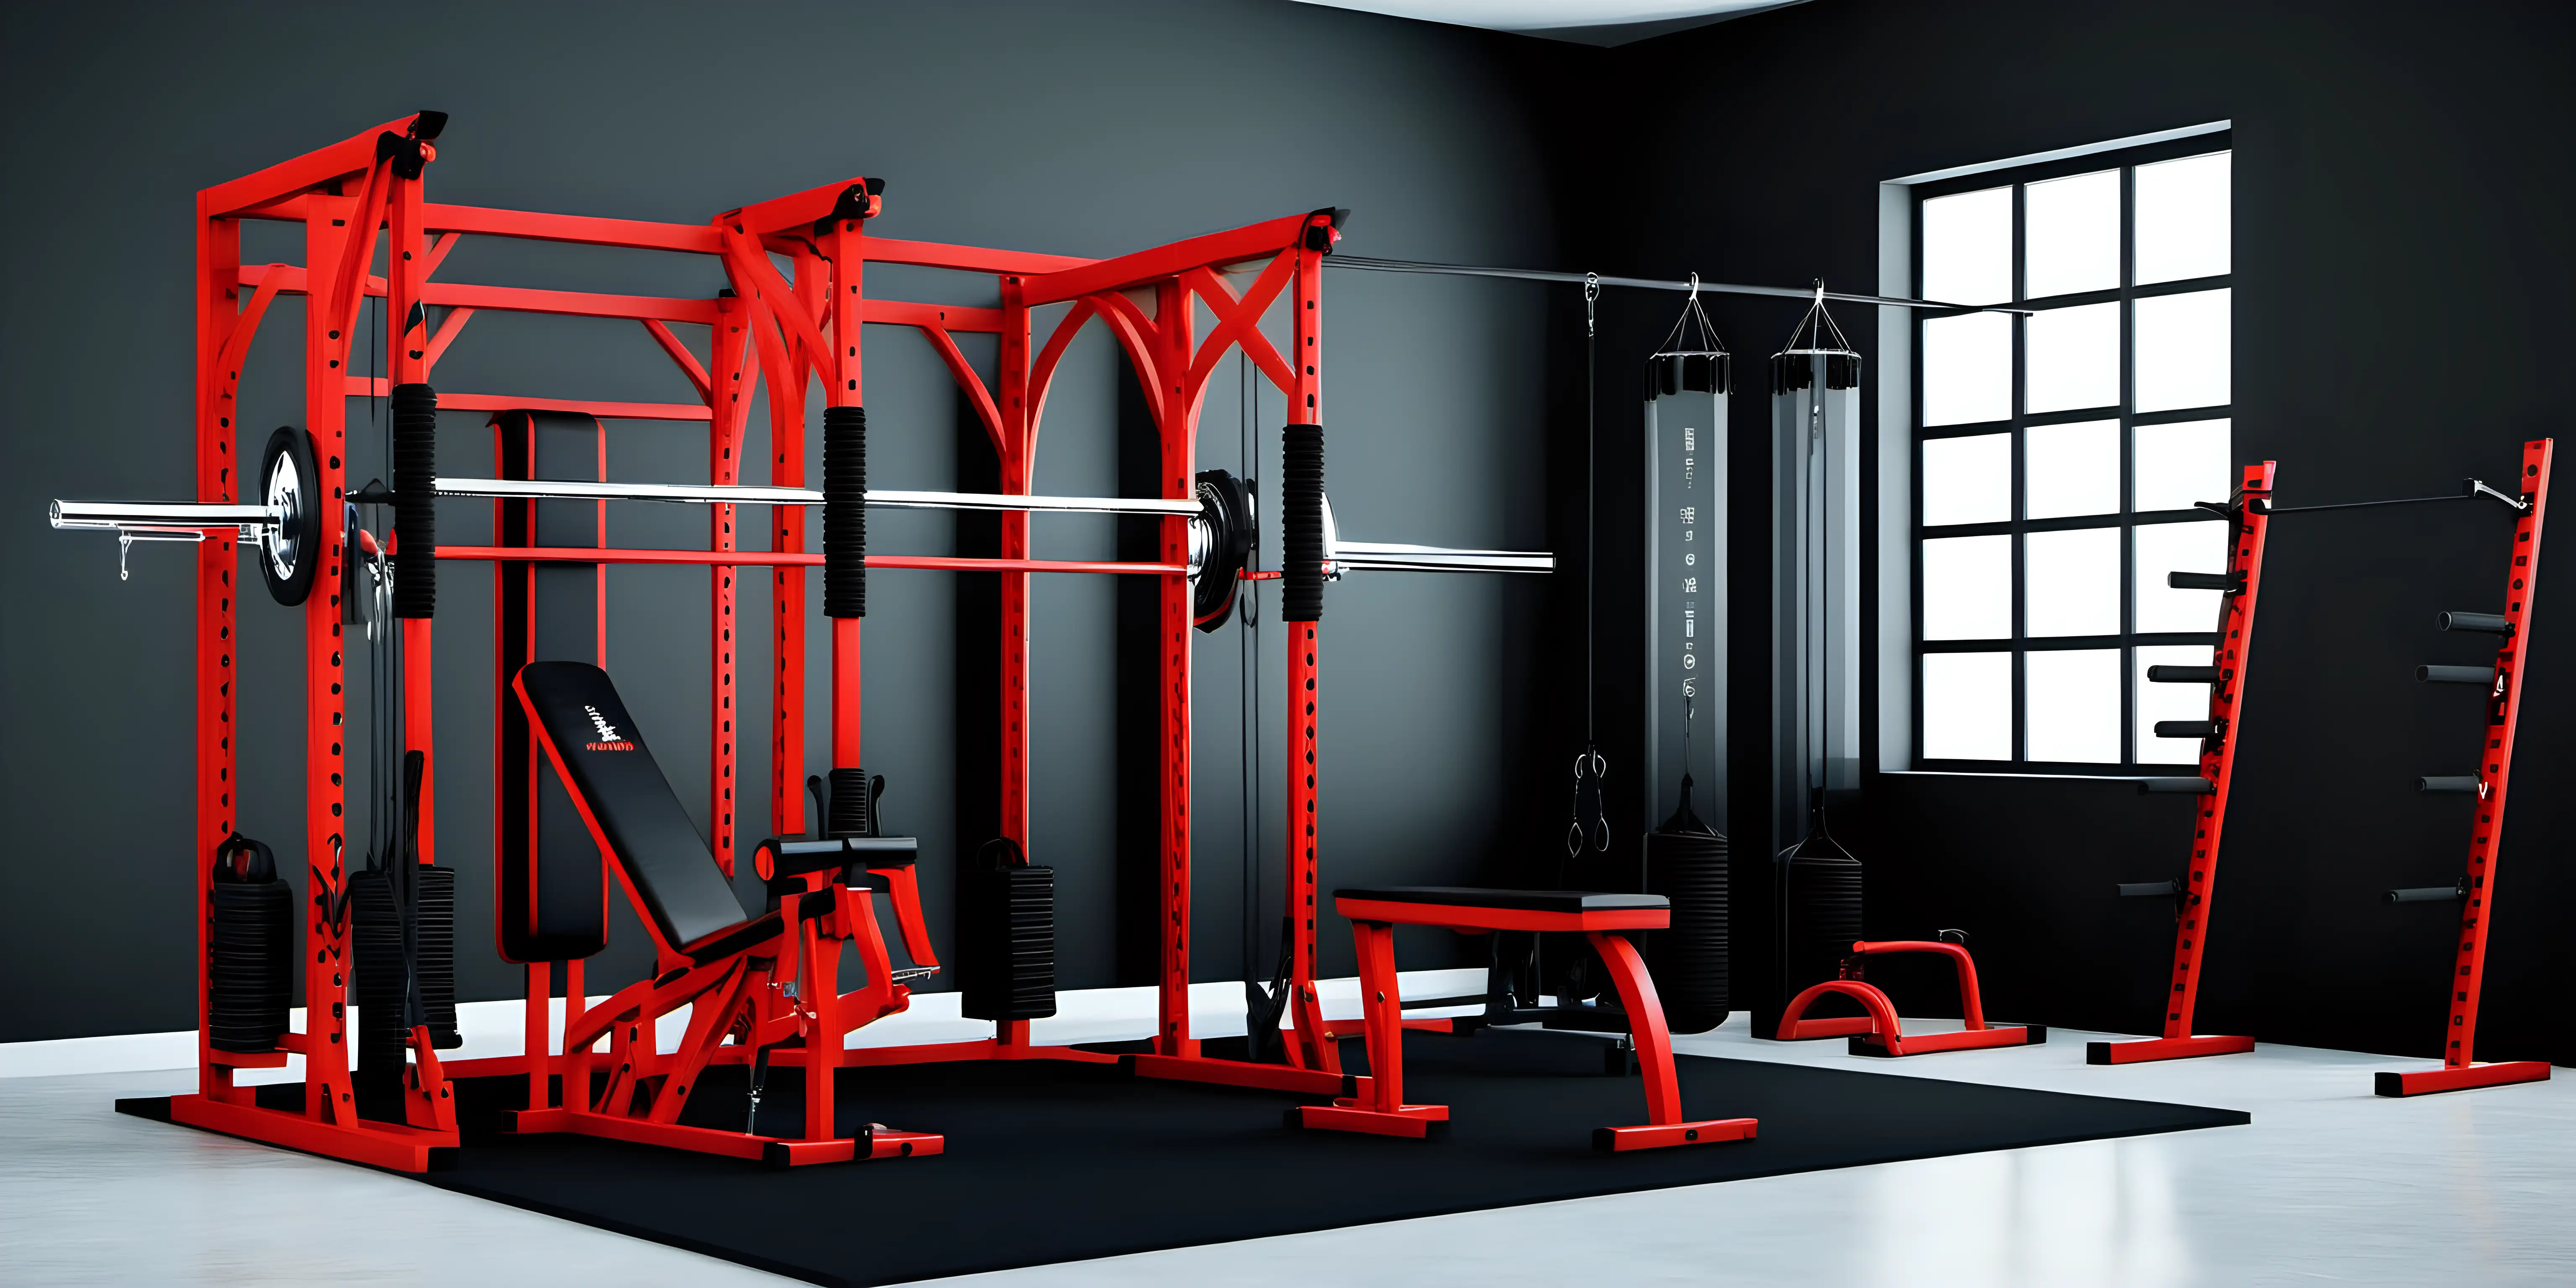 a studio gym set red and black

